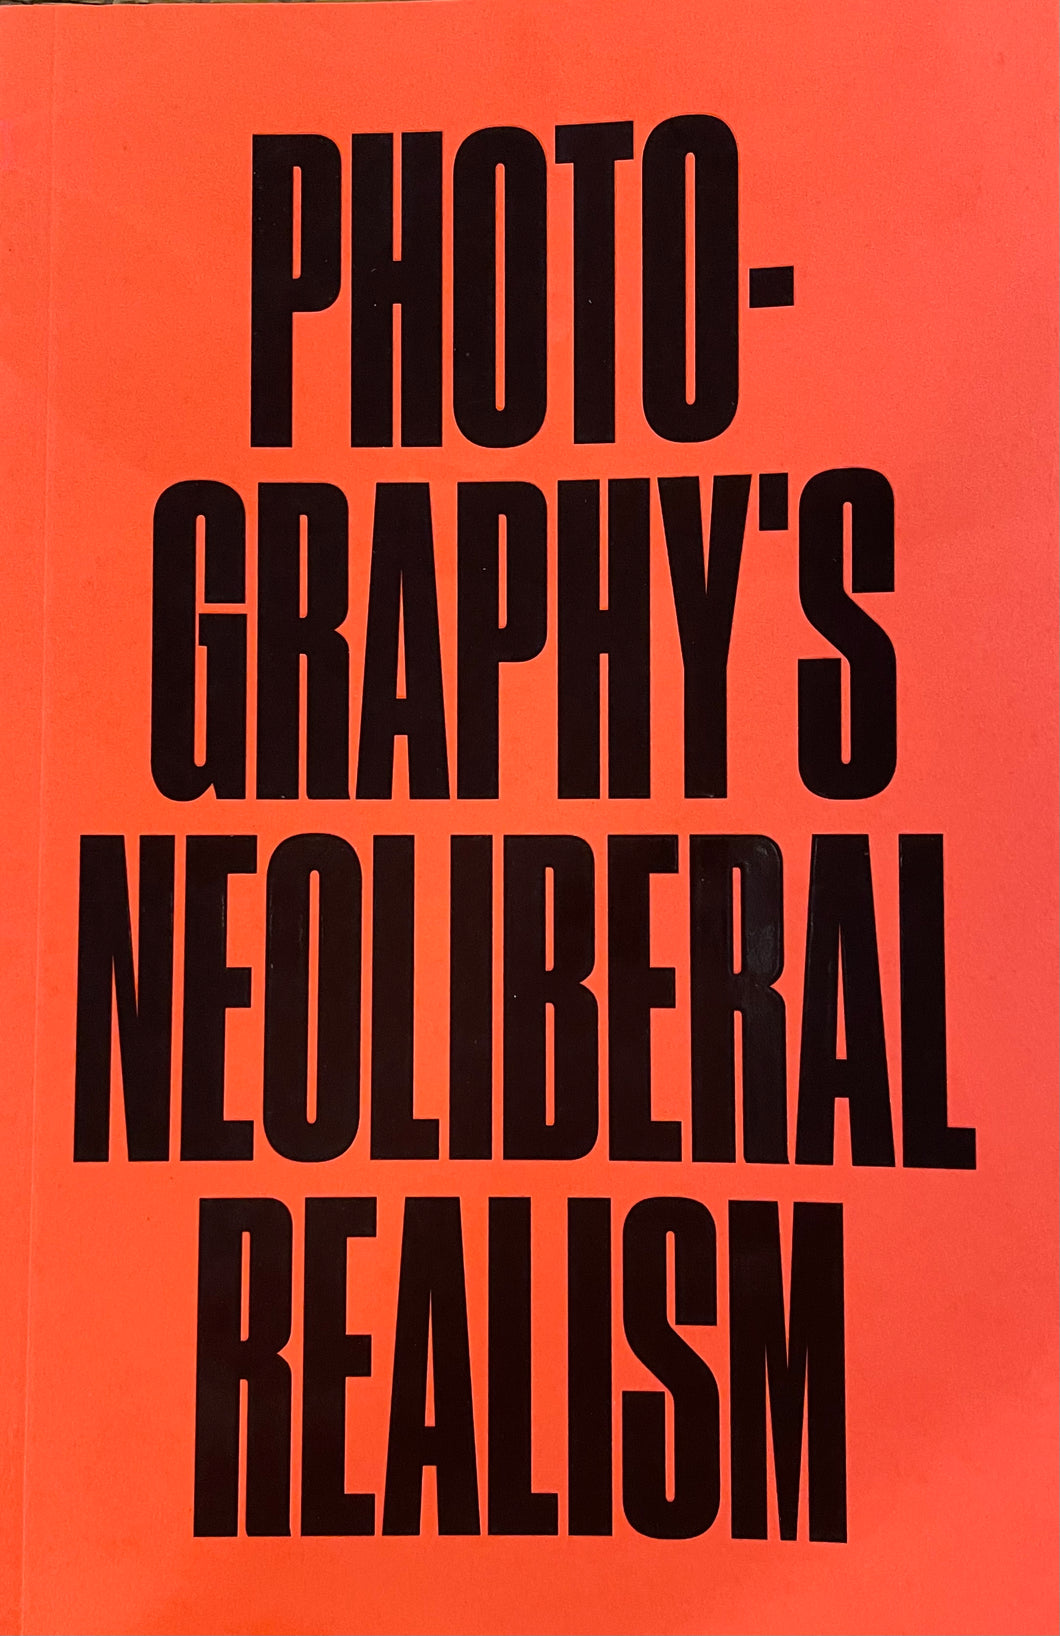 Photography's Neoliberal Realism Jörg Colberg ร้านหนังสือและสิ่งของ เป็นร้านหนังสือภาษาอังกฤษหายาก และร้านกาแฟ หรือ บุ๊คคาเฟ่ ตั้งอยู่สุขุมวิท กรุงเทพ